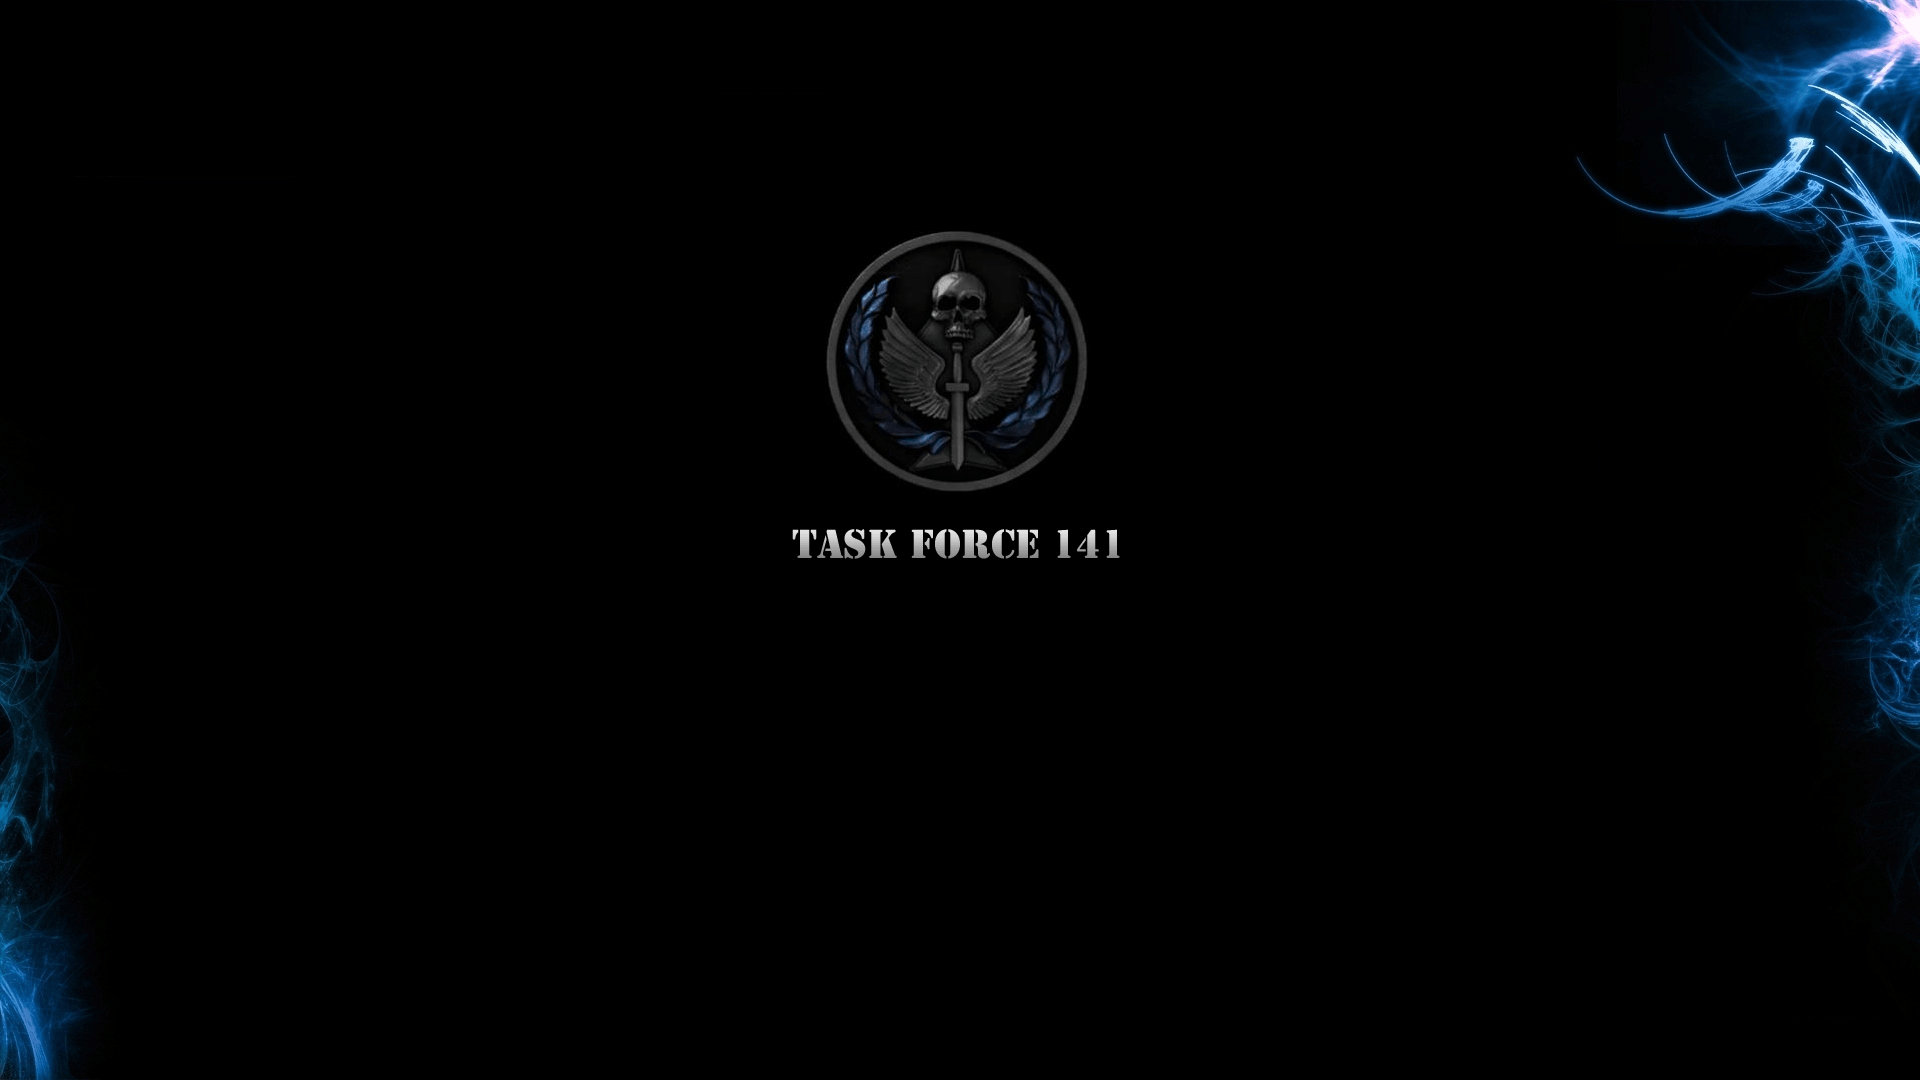 Task Force 141 rotating emblem